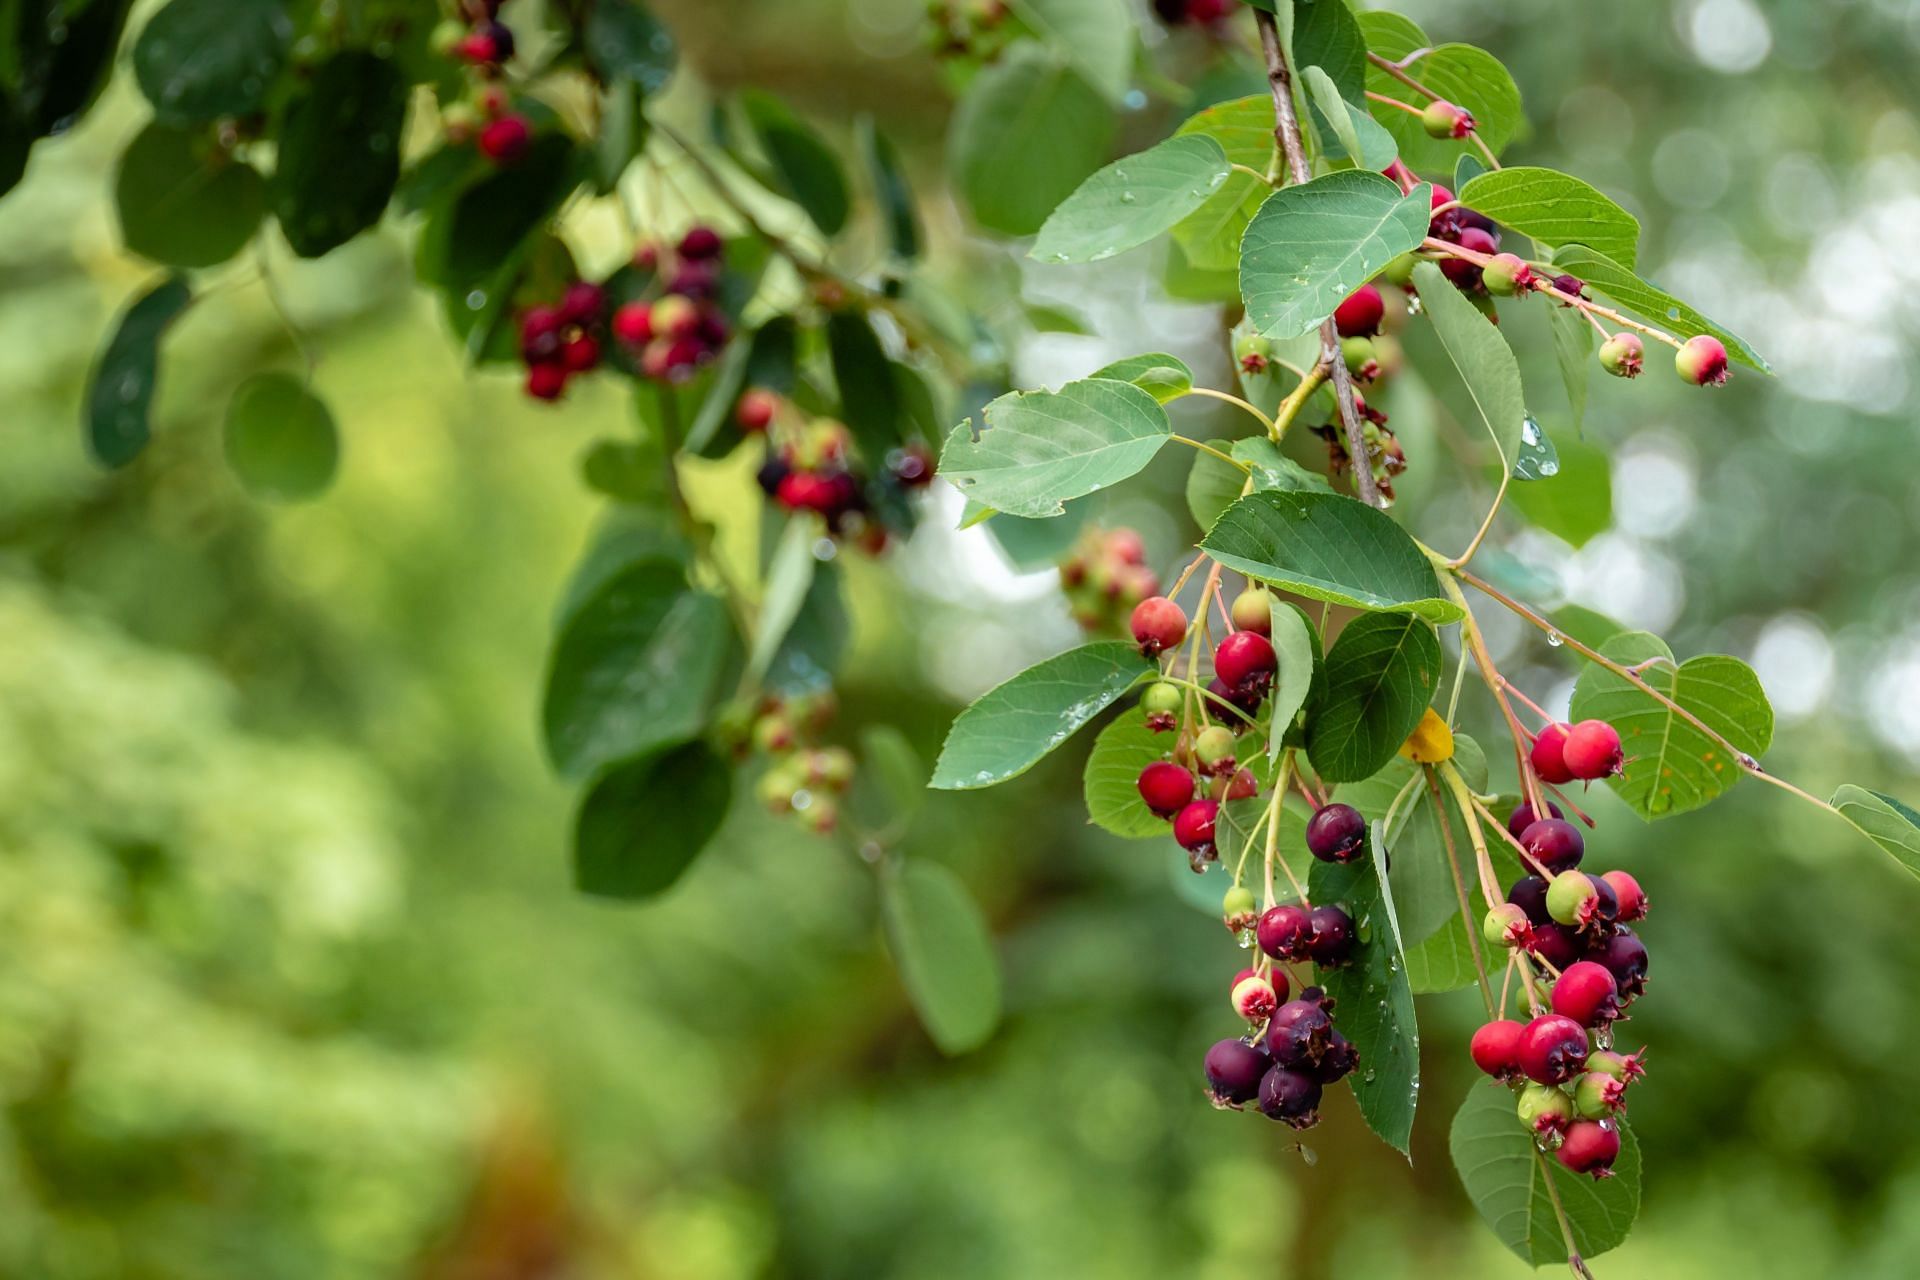 Elderberries are among the mildly poisonous fruits (Image via Unsplash/Pawel Czerwinski)